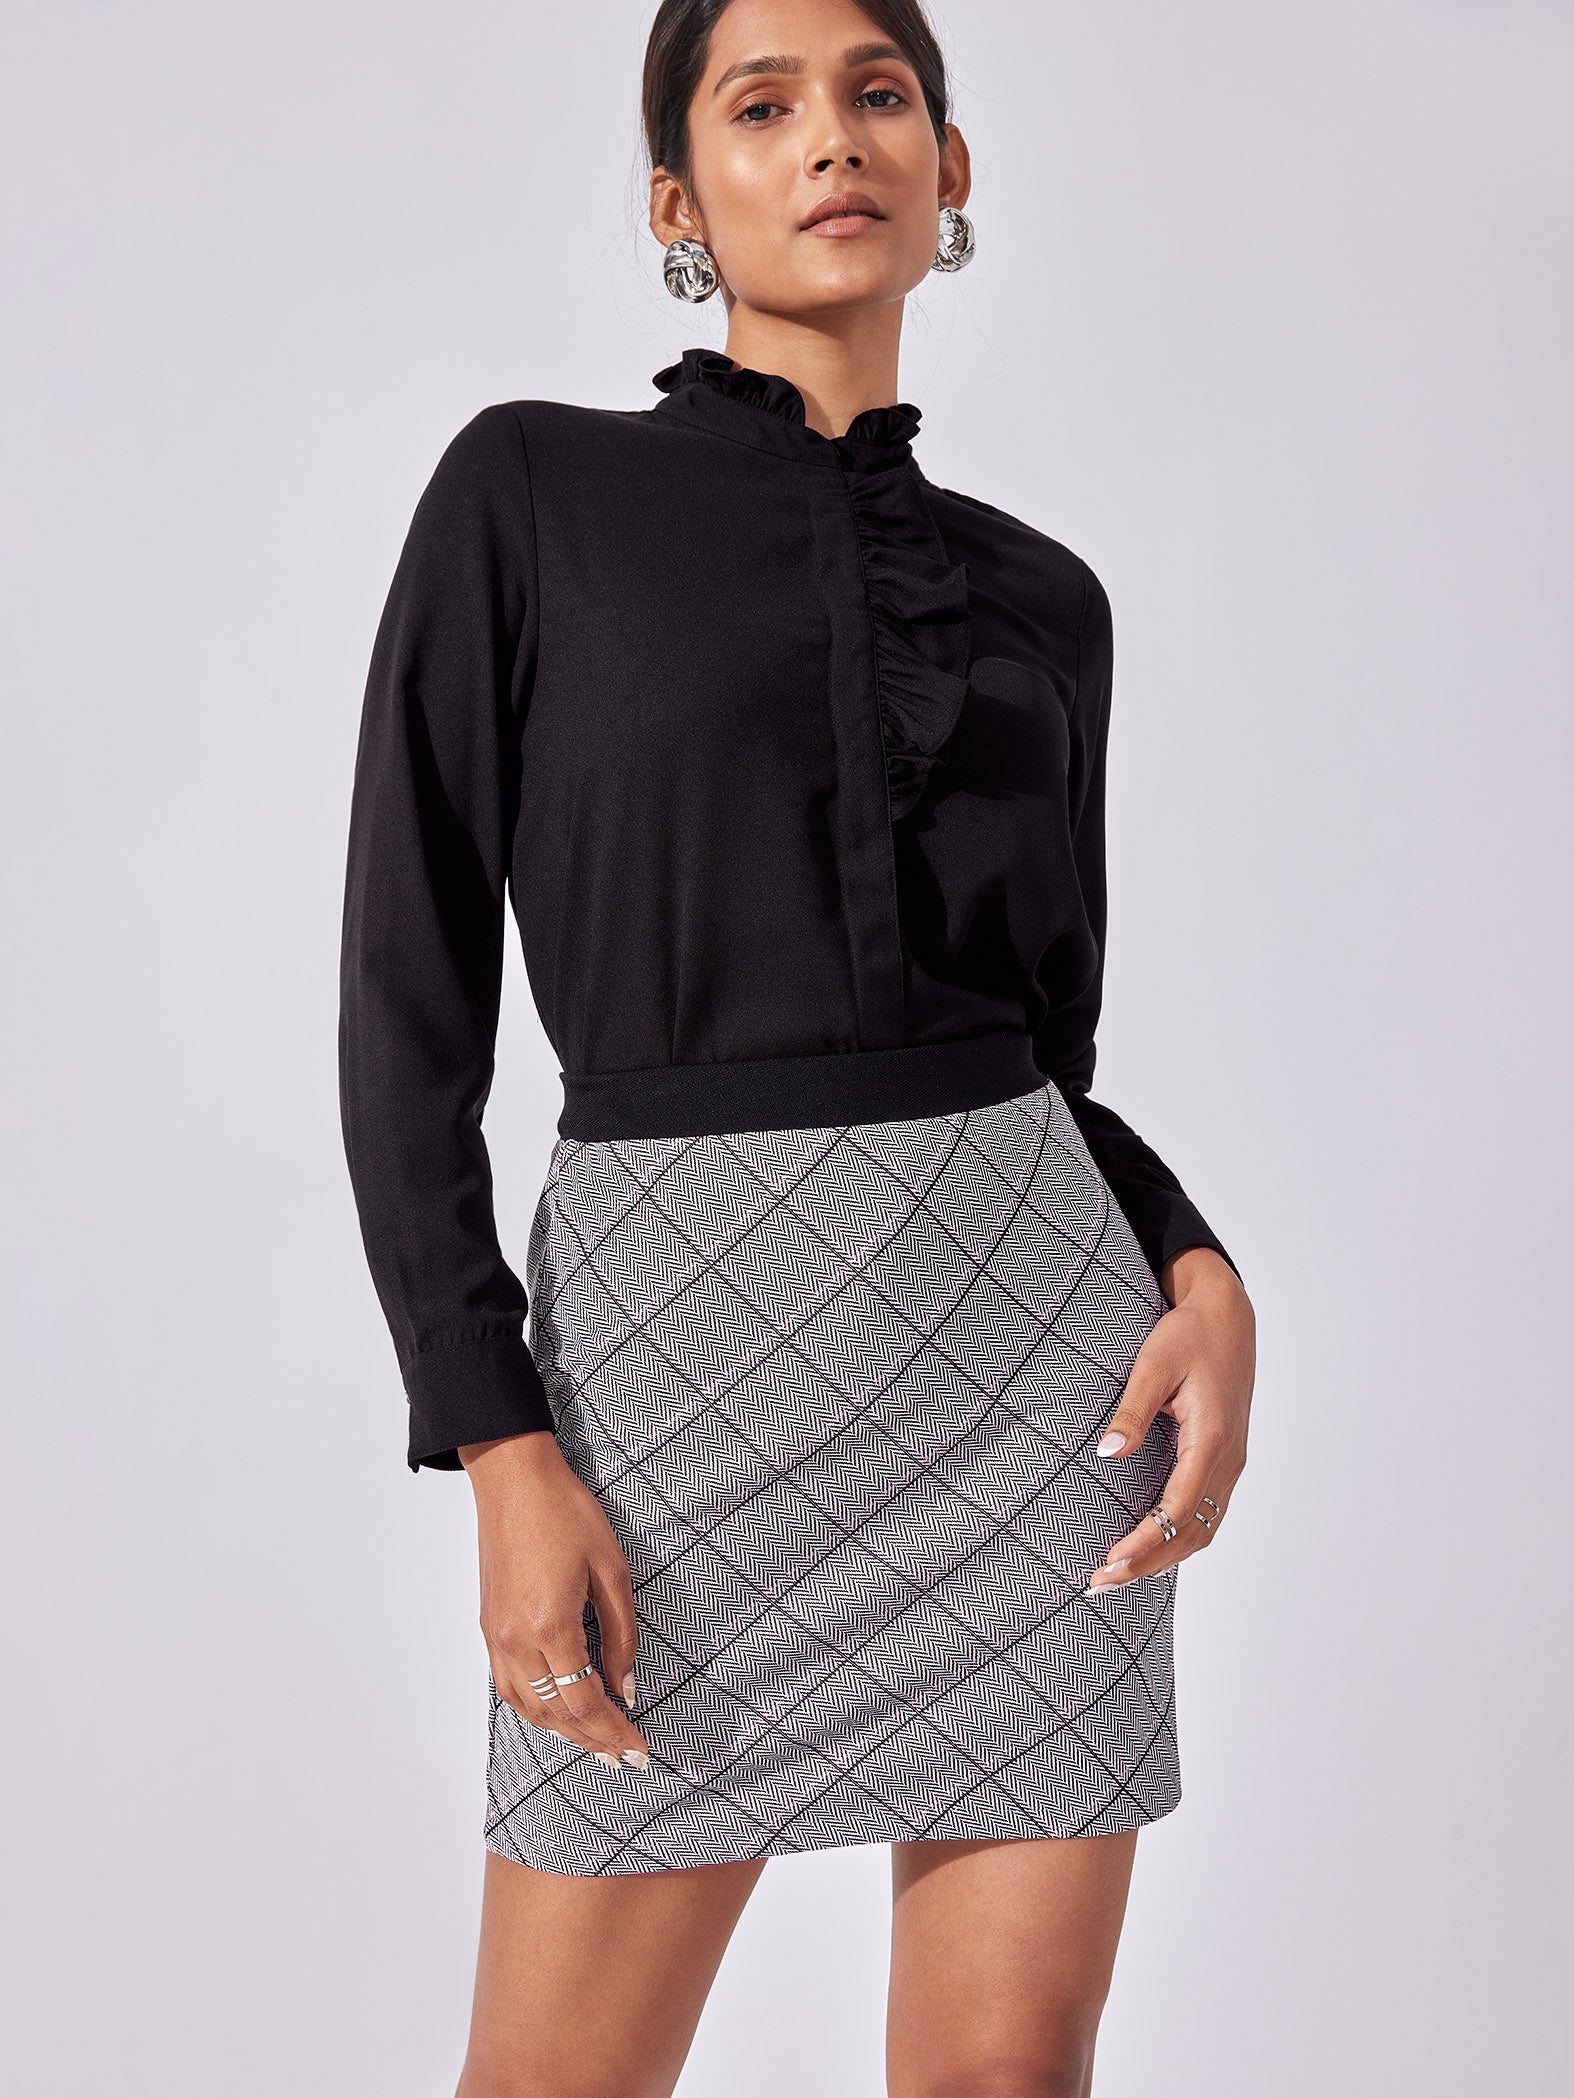 Checkered Mini Skirt